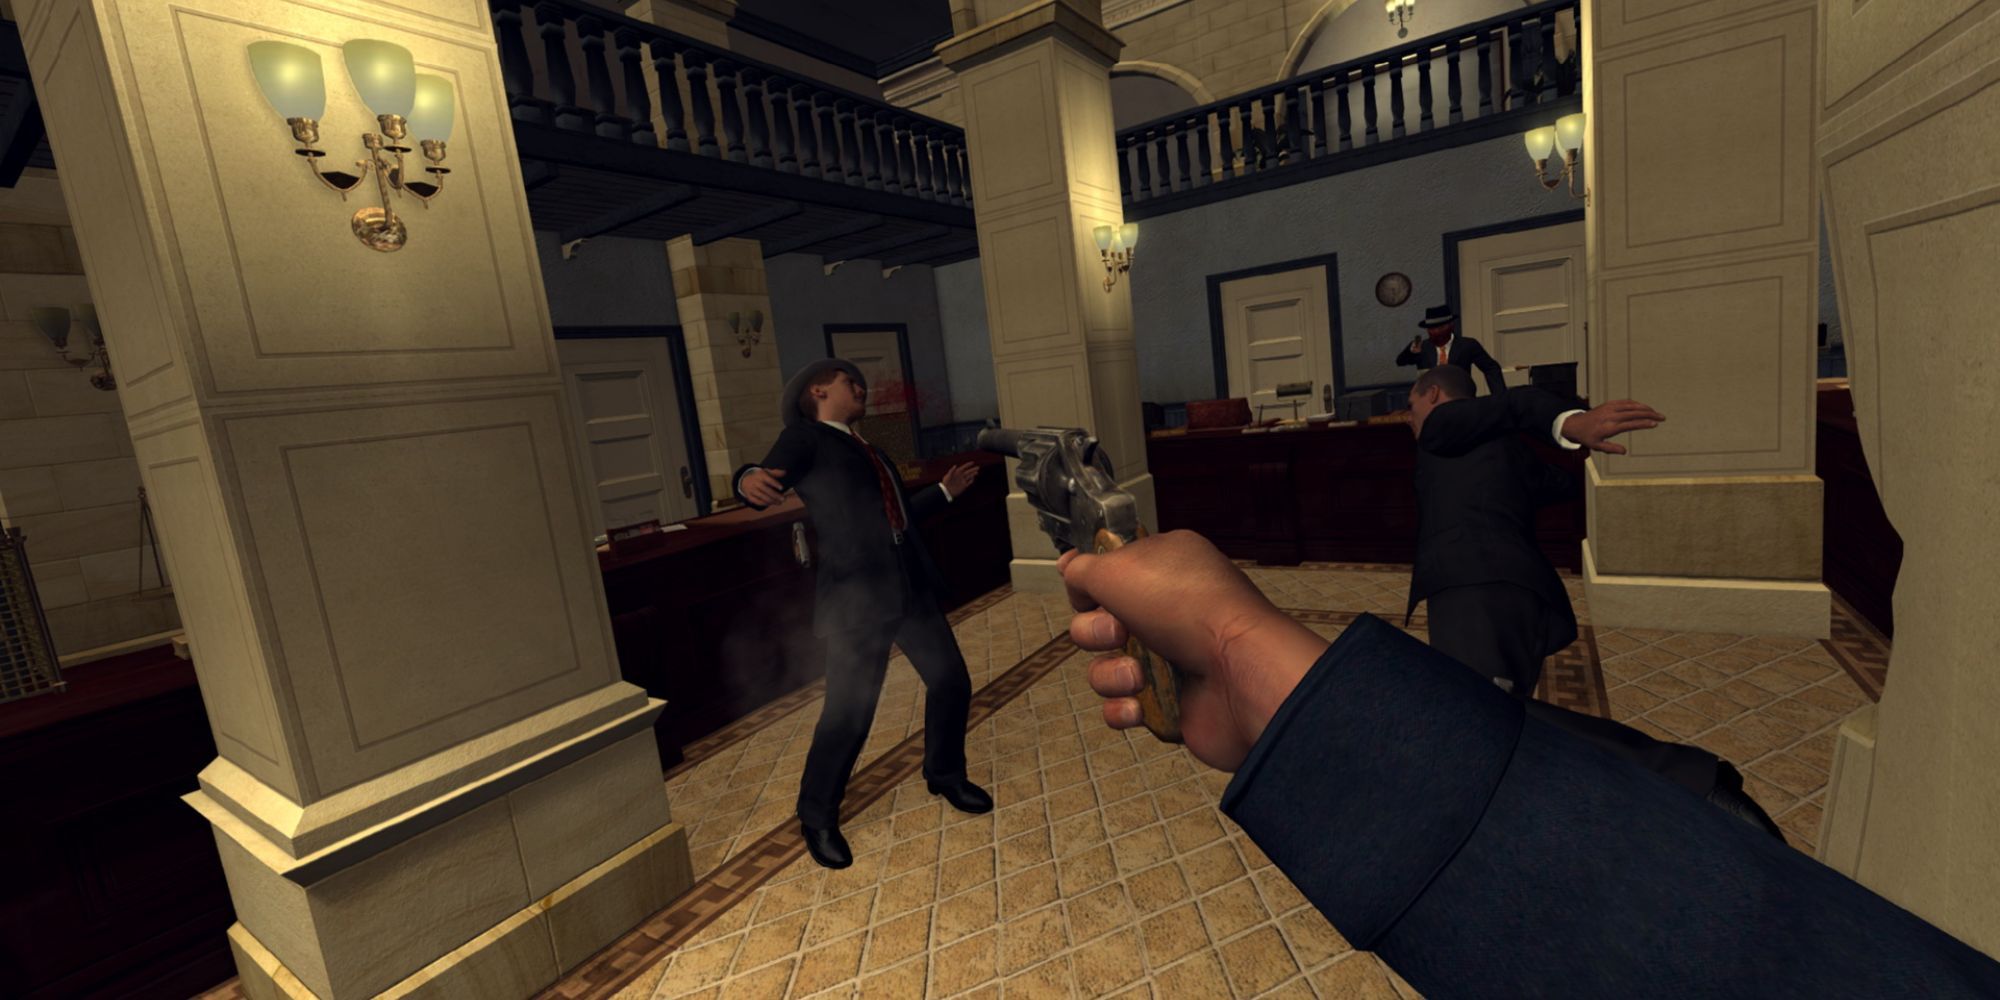 LA_noire_VR_case_files_player_fighting_enemies_with_guns